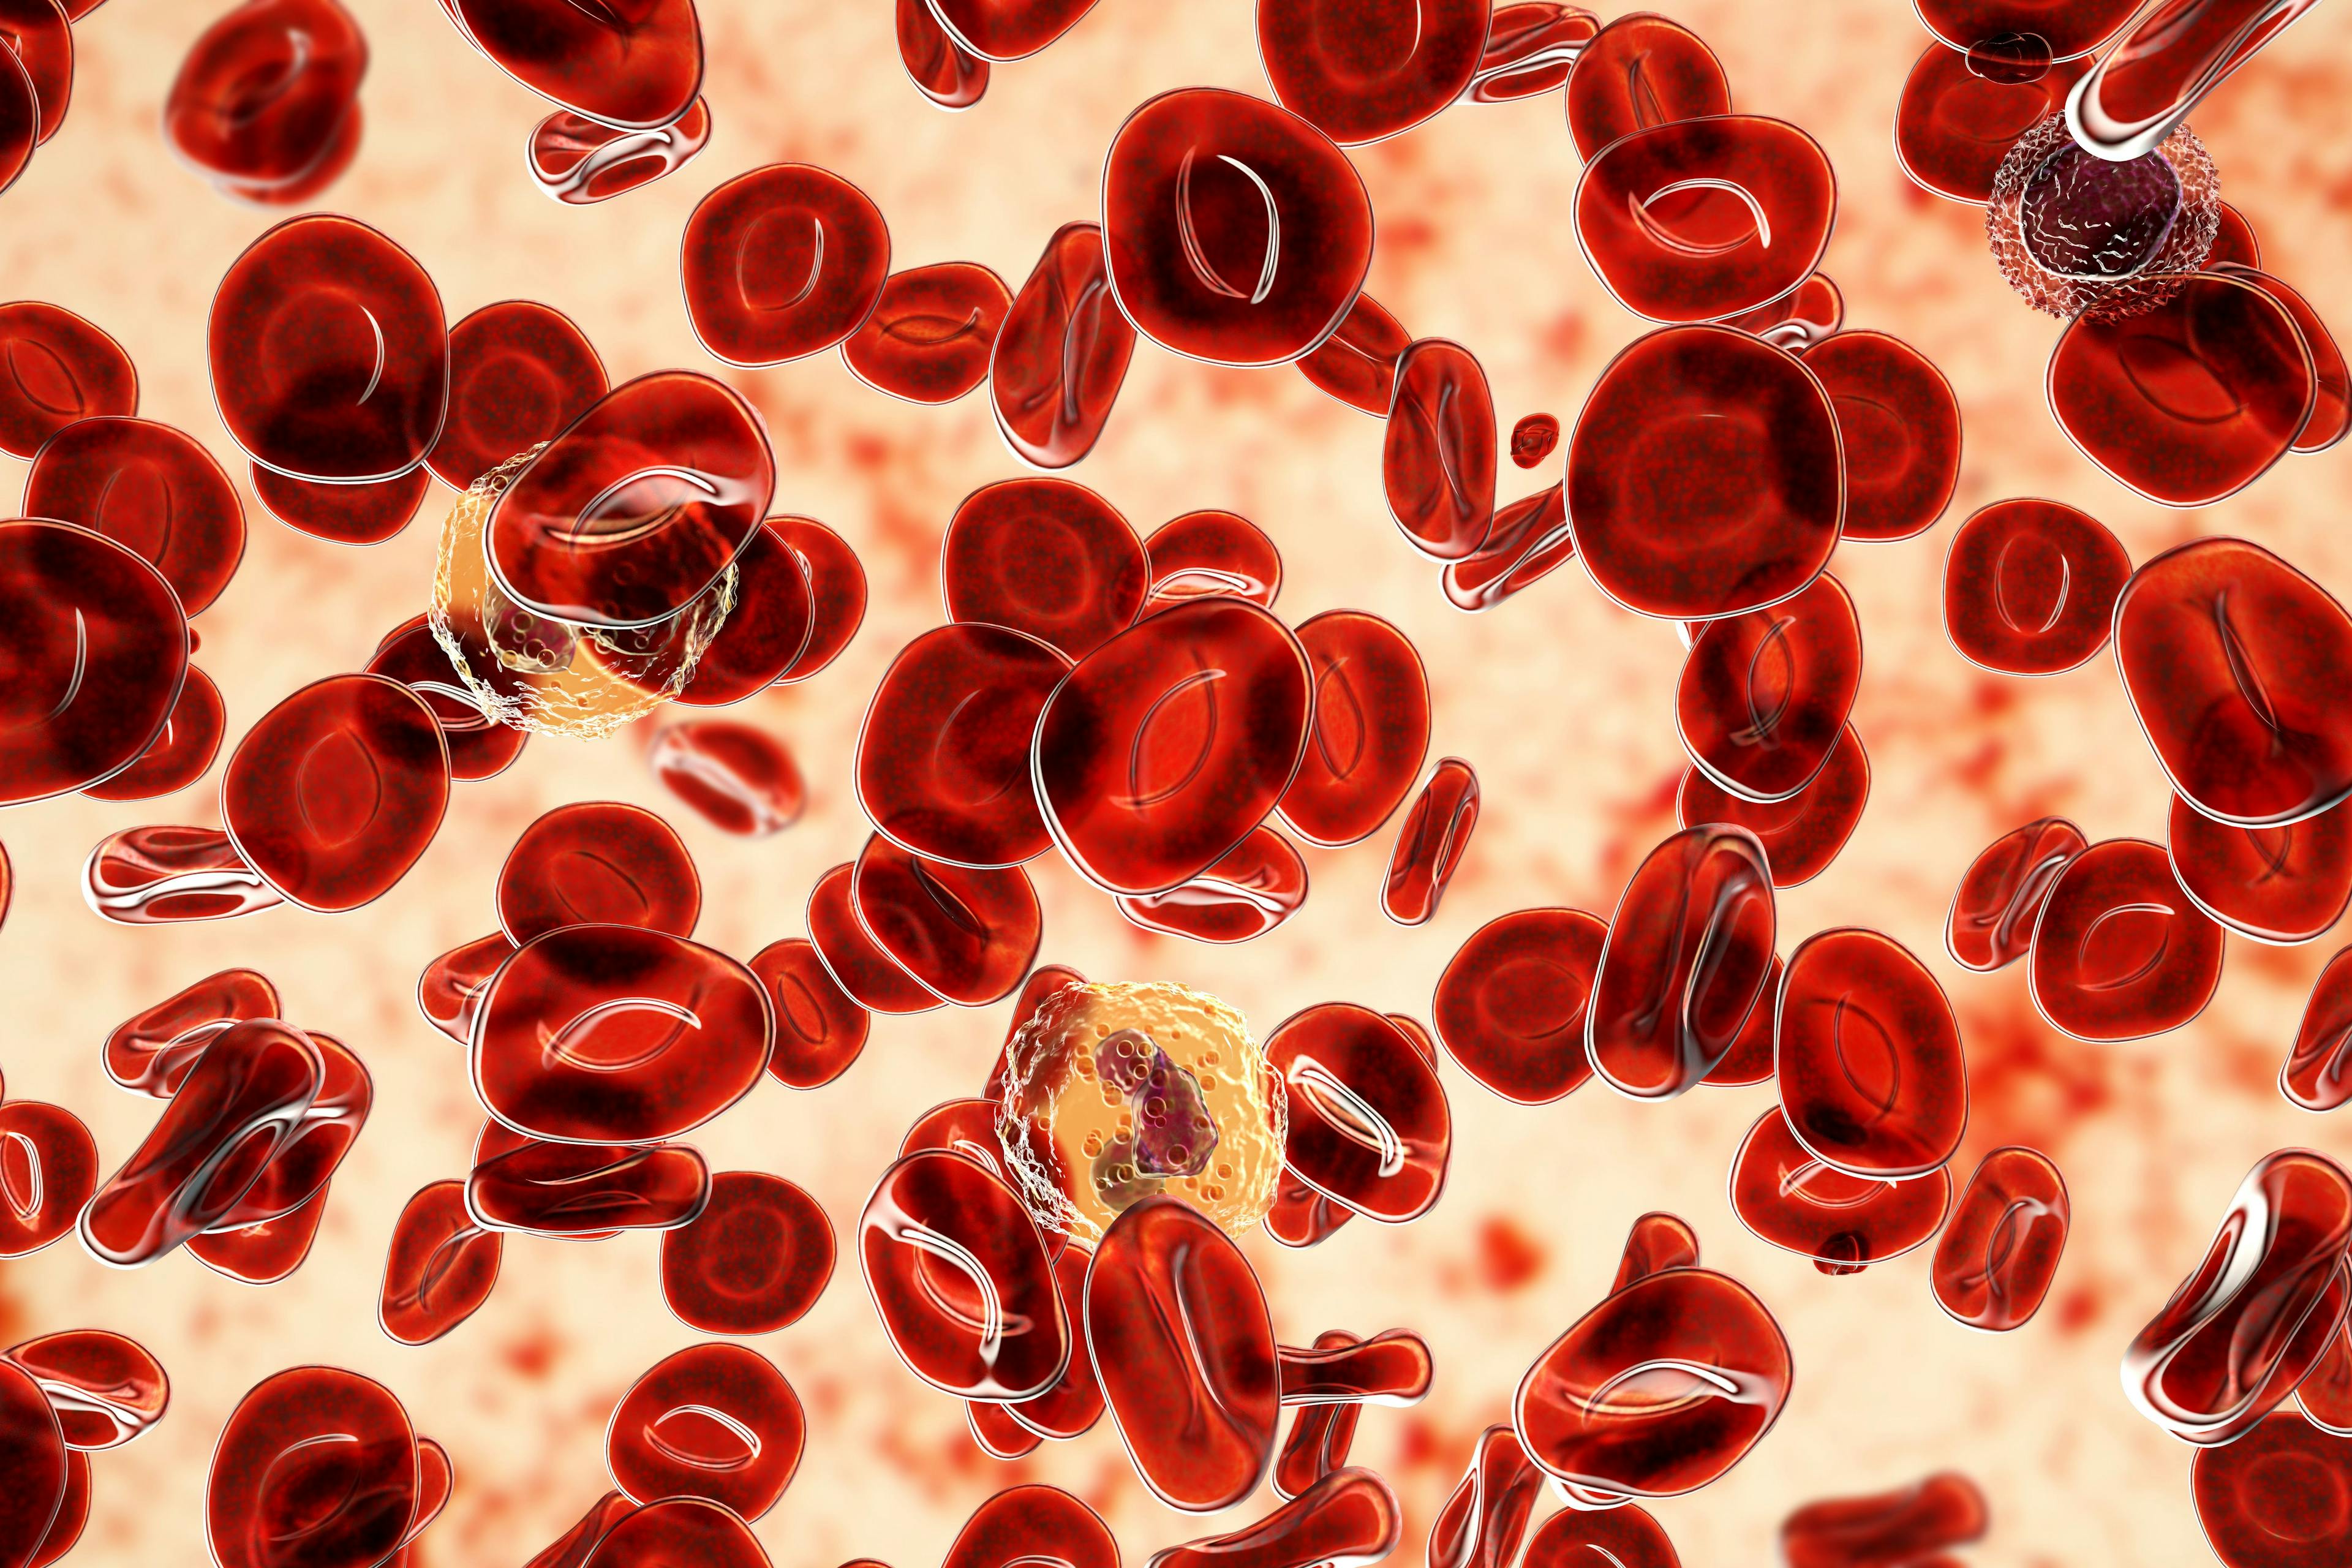 Blood cells and polycythemia vera | Image credit: Dr_Microbe - stock.adobe.com